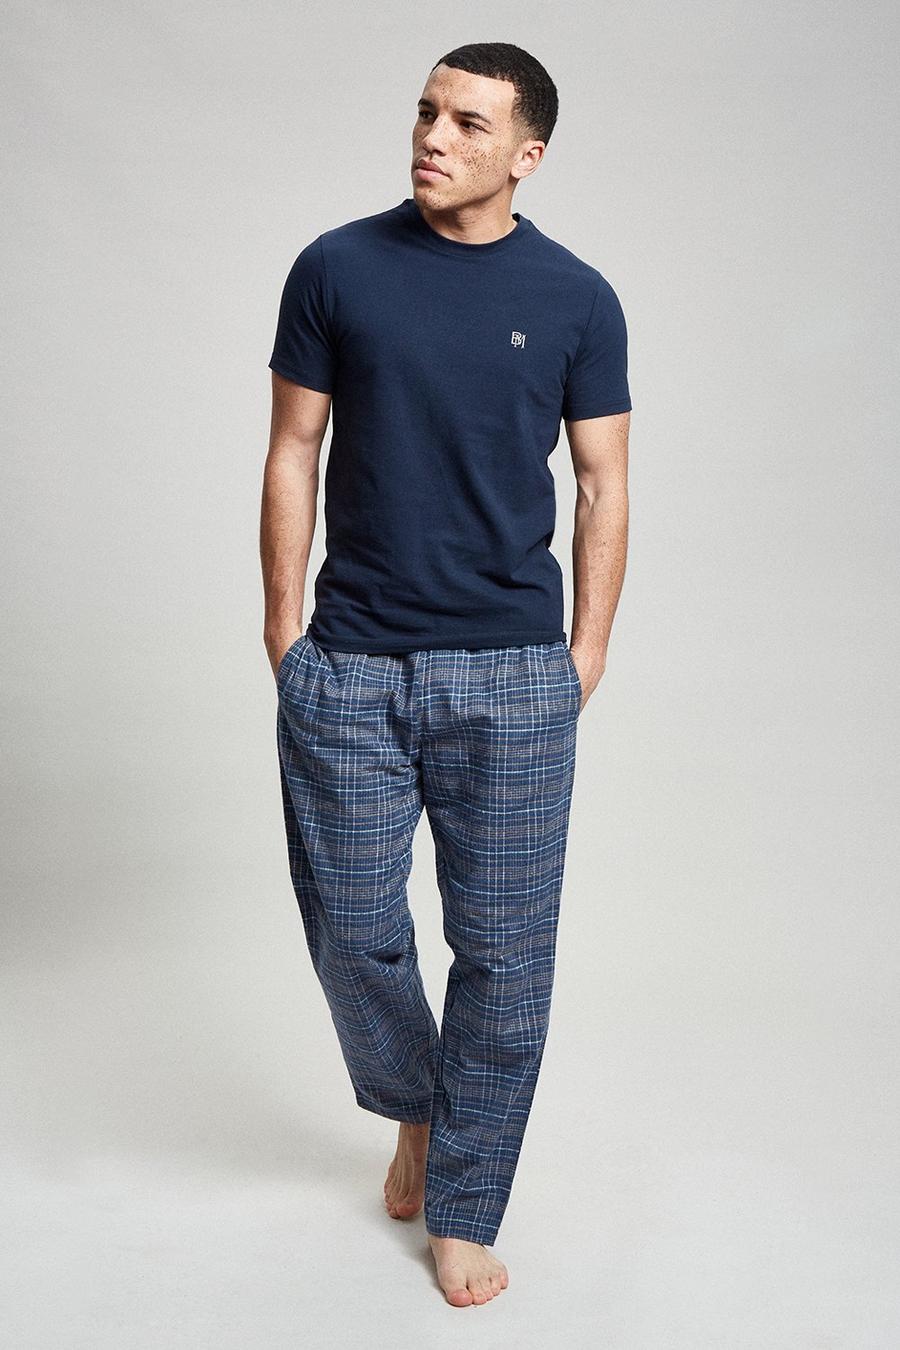 Navy Short Sleeve Tee & Check Pyjama Set